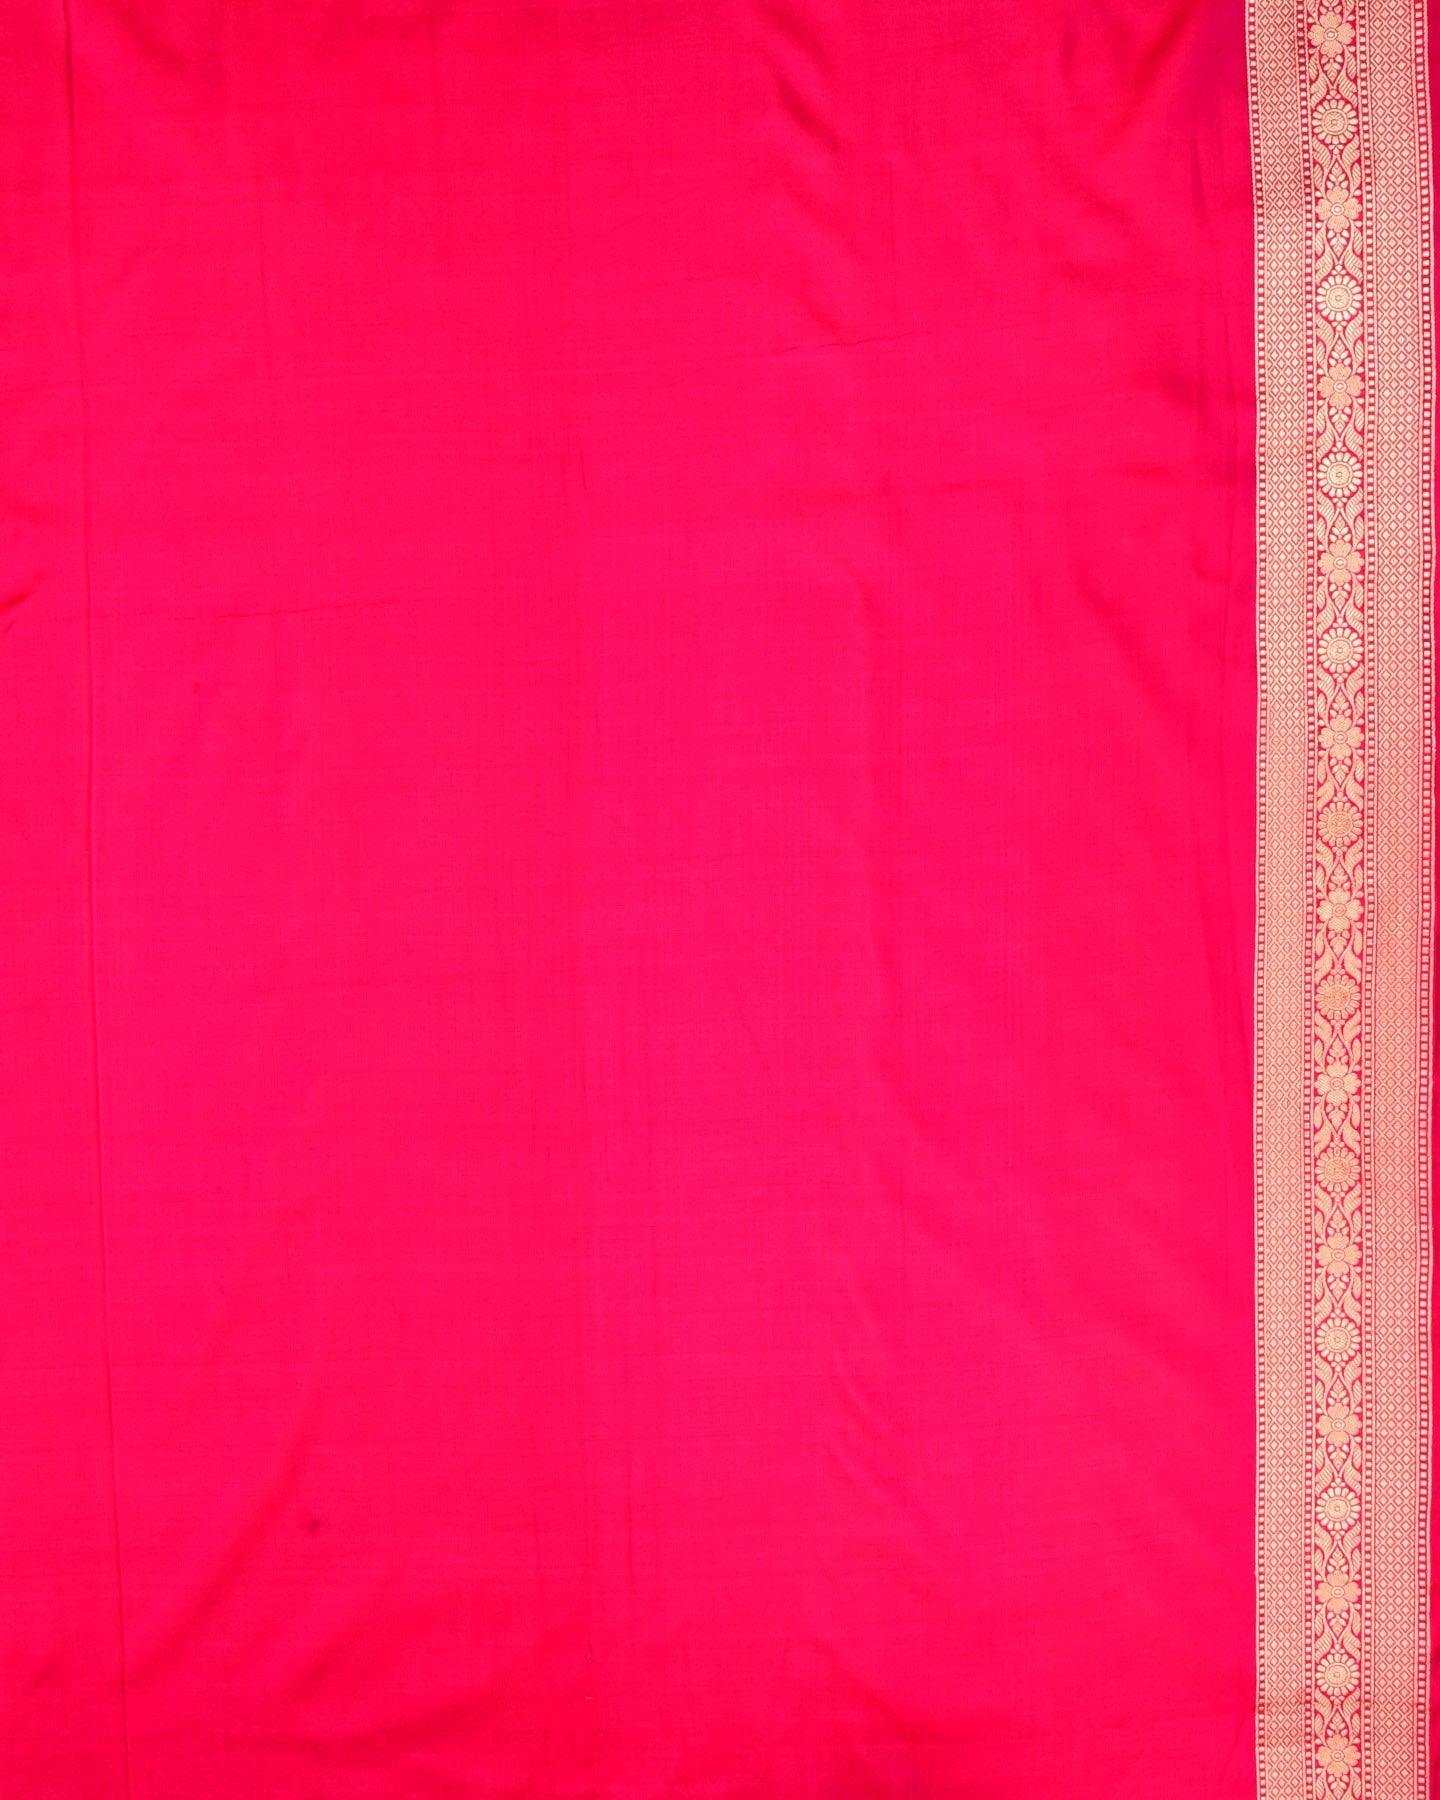 Shot Pink-Red Banarasi Alfi Sona Rupa Jaal Cutwork Brocade Handwoven Katan Silk Saree - By HolyWeaves, Benares